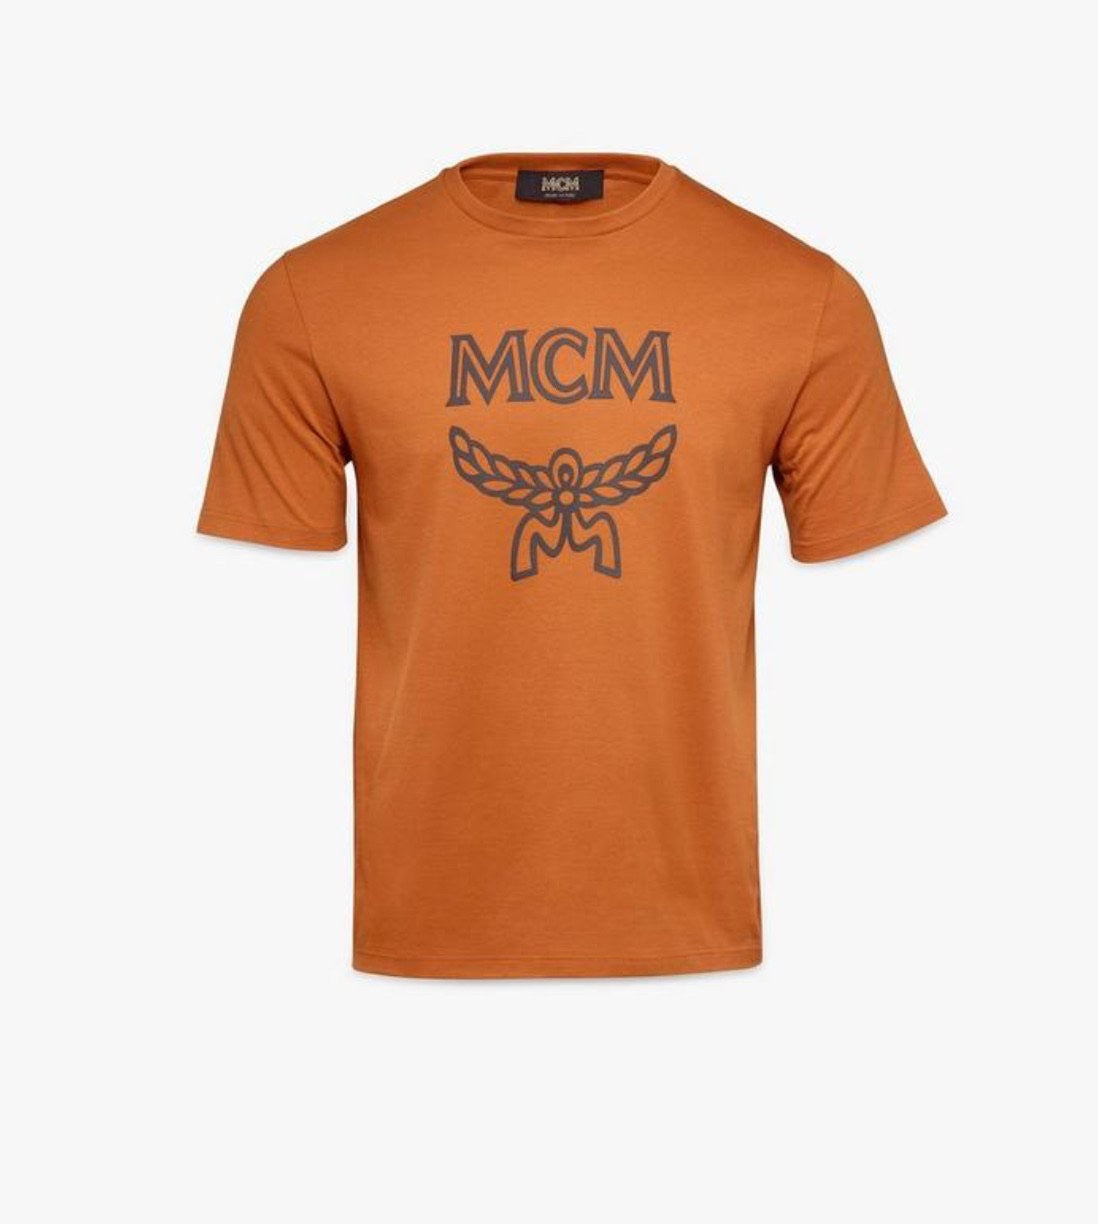 Mcm (cognac Men's Classic Logo T-Shirt) – Vip Clothing Stores